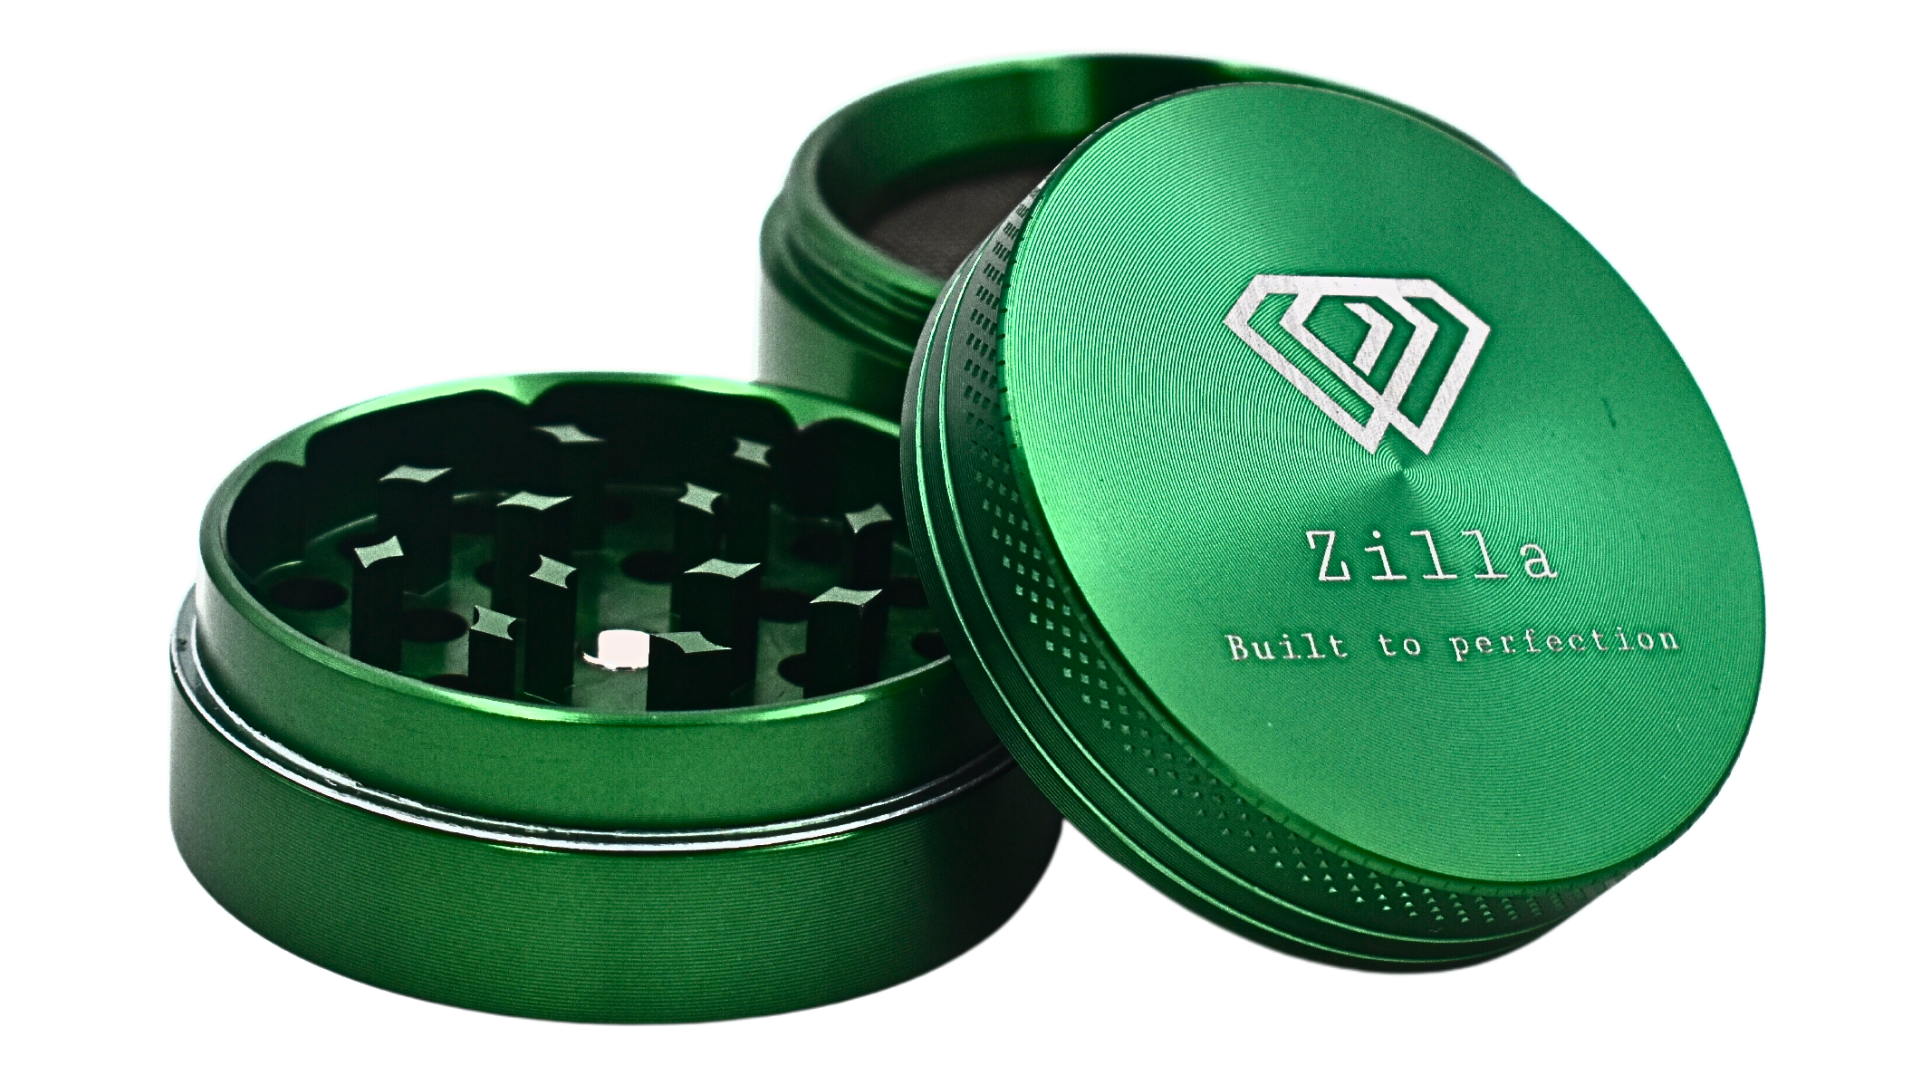 Zilla Aluminium 50mm (Medium Size) Grinder - Green - Bittchaser Smoke Shop